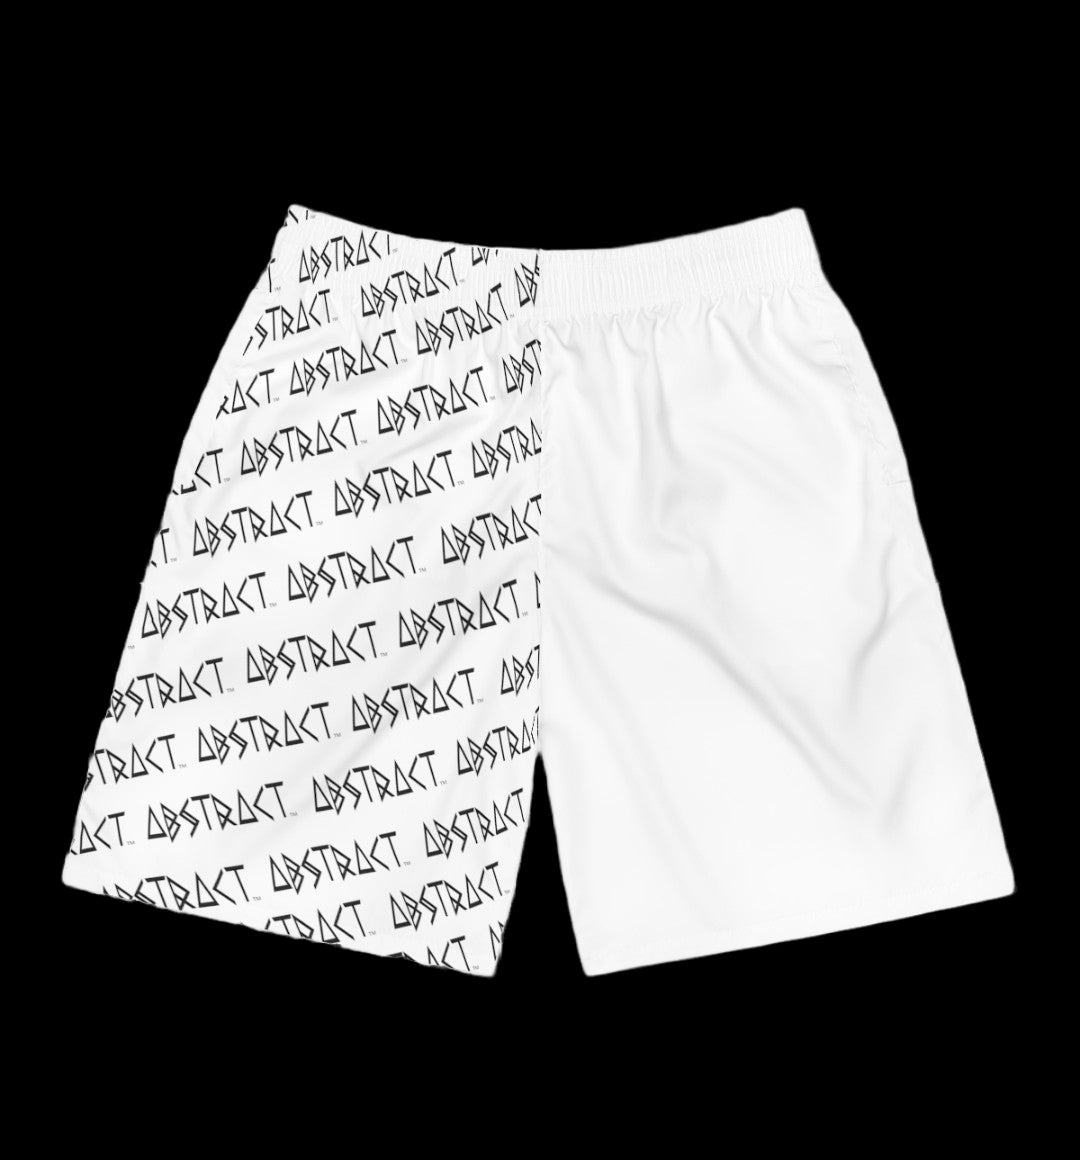 Overkill Shorts Shorts XS,S,M,L,XL,2XL,3XL White Smoke